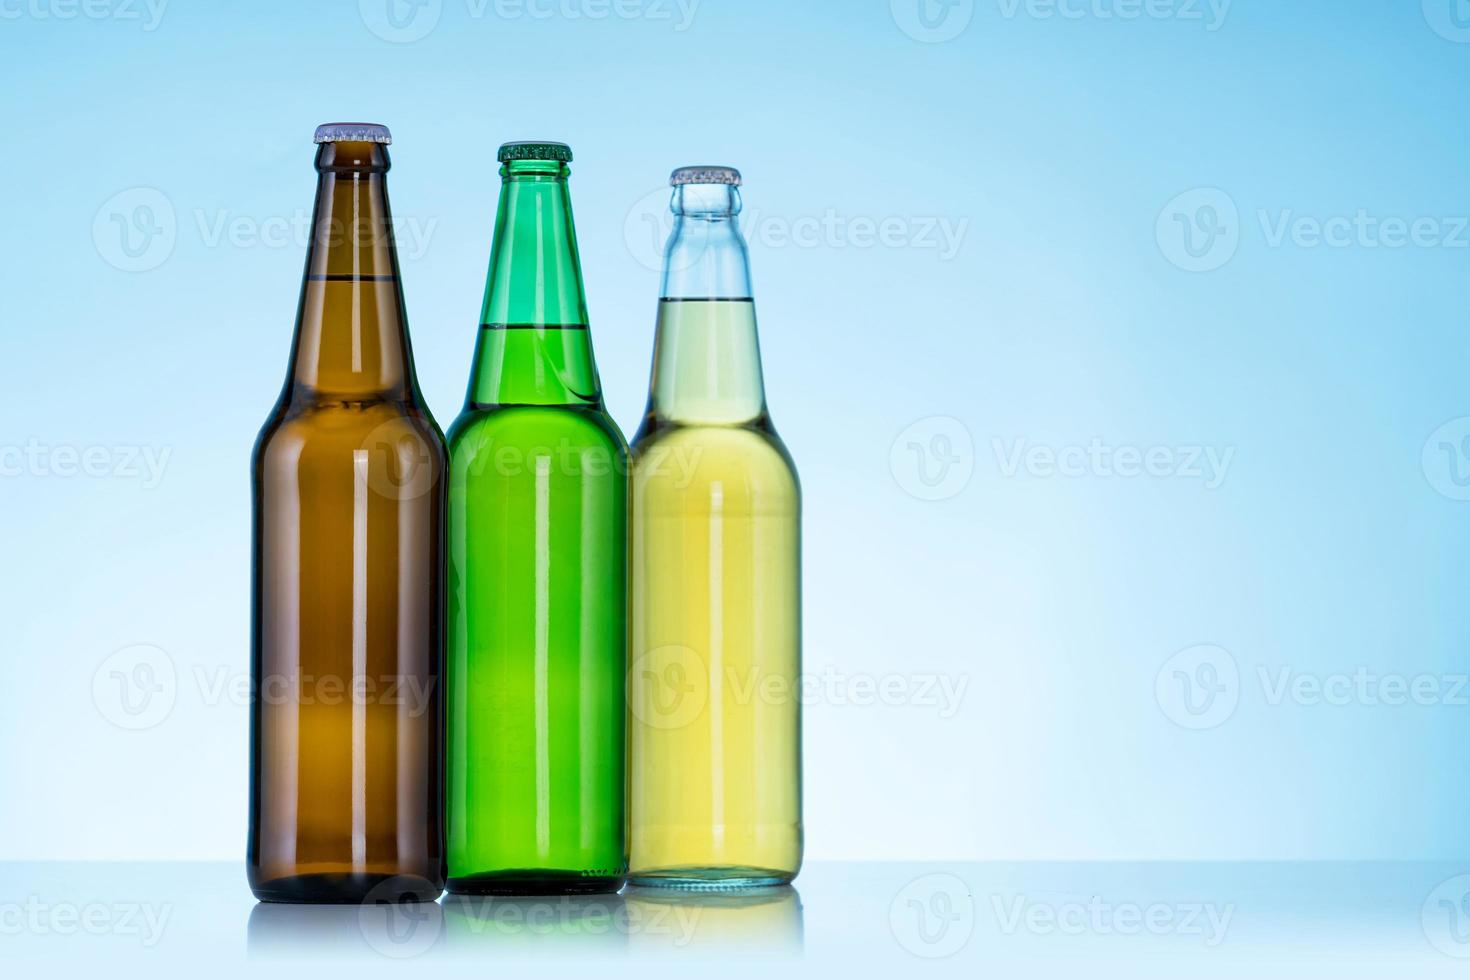 grupp av tre flaskor öl på blå bakgrund foto